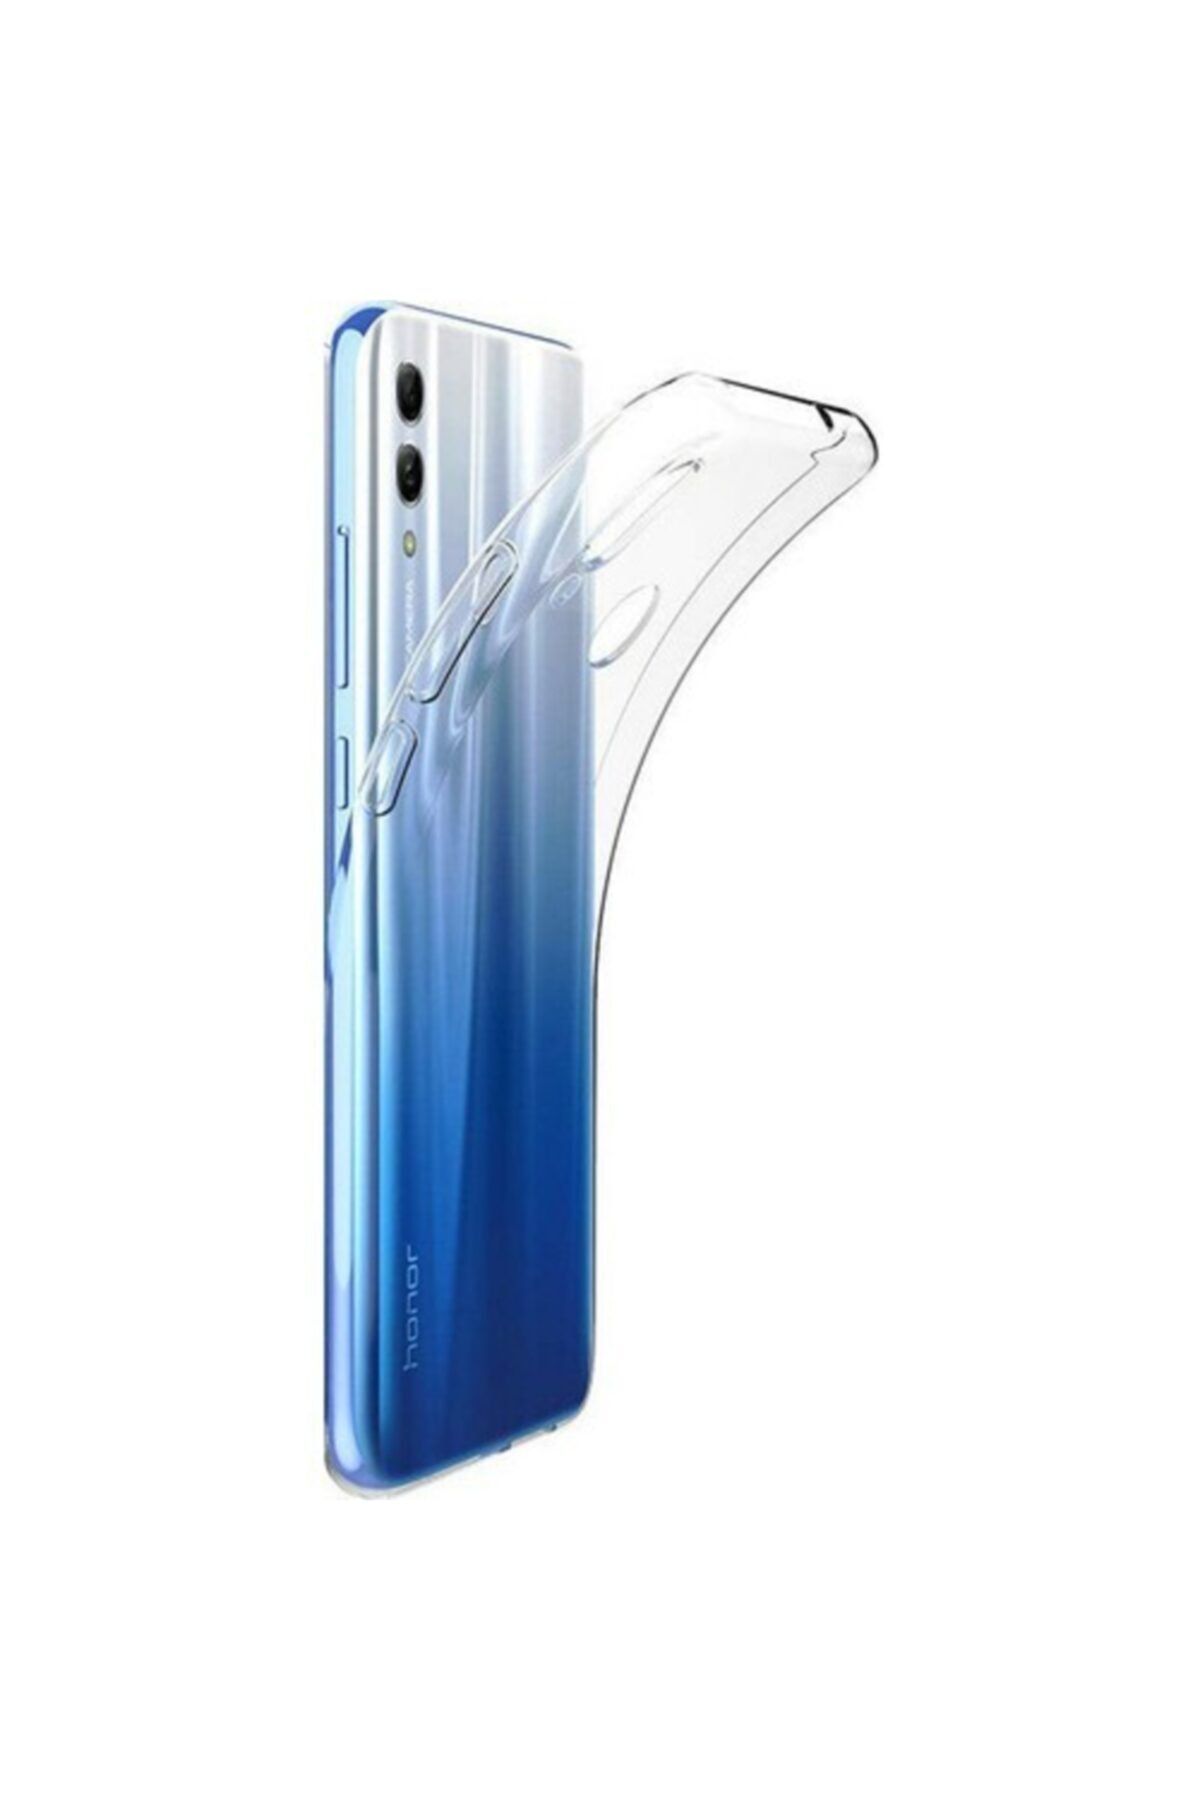 Fibaks Huawei P Smart 2019 Kılıf A Şeffaf Lüx Süper Yumuşak 0.3mm Ince Slim Silikon